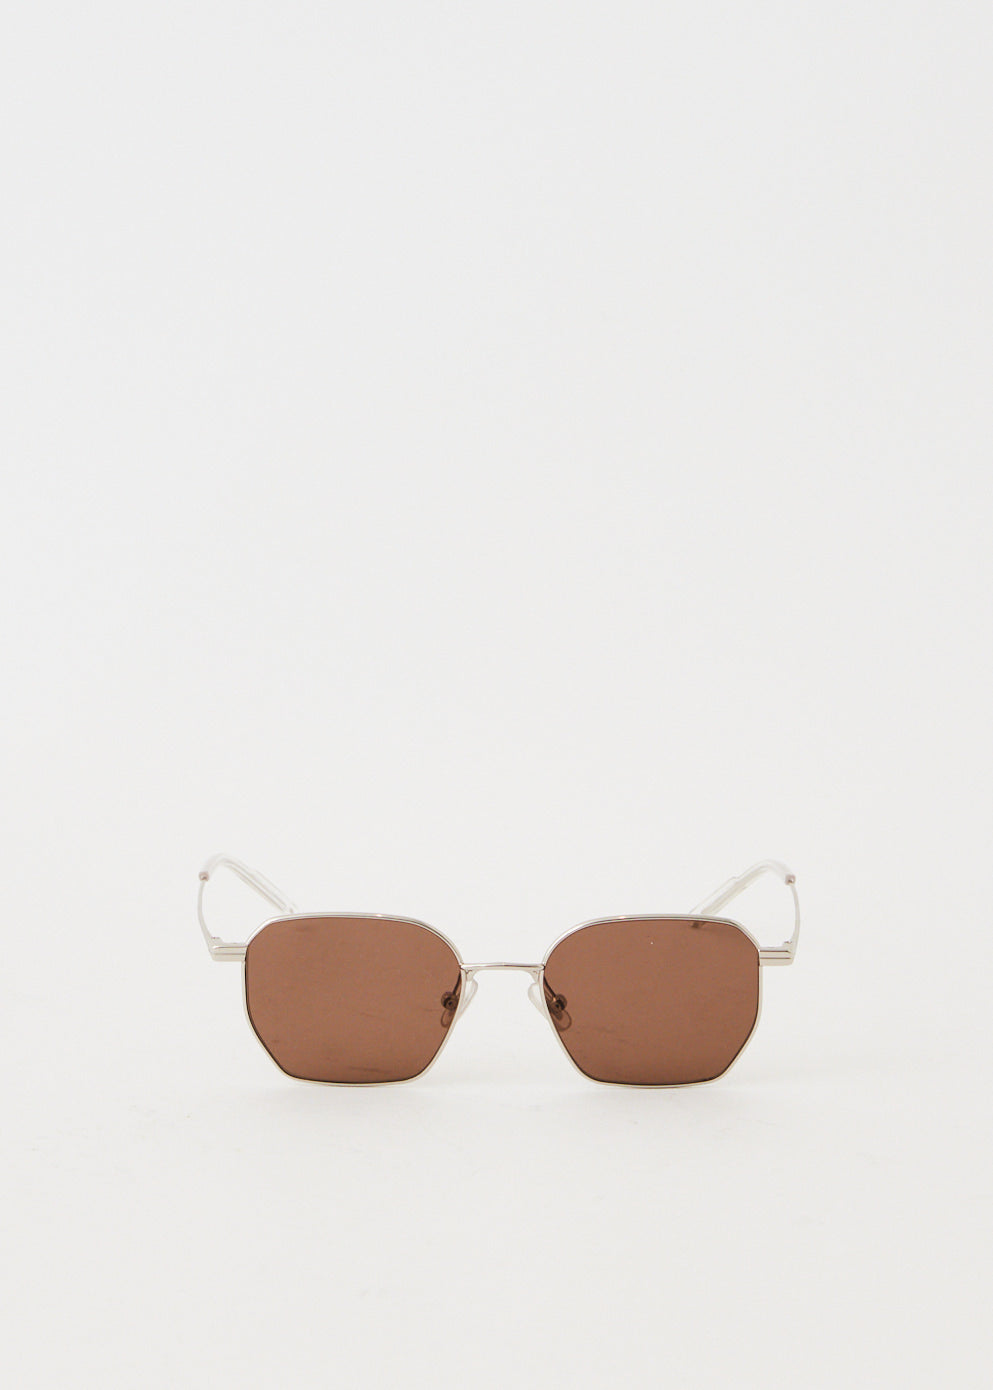 Bowly 02 Sunglasses